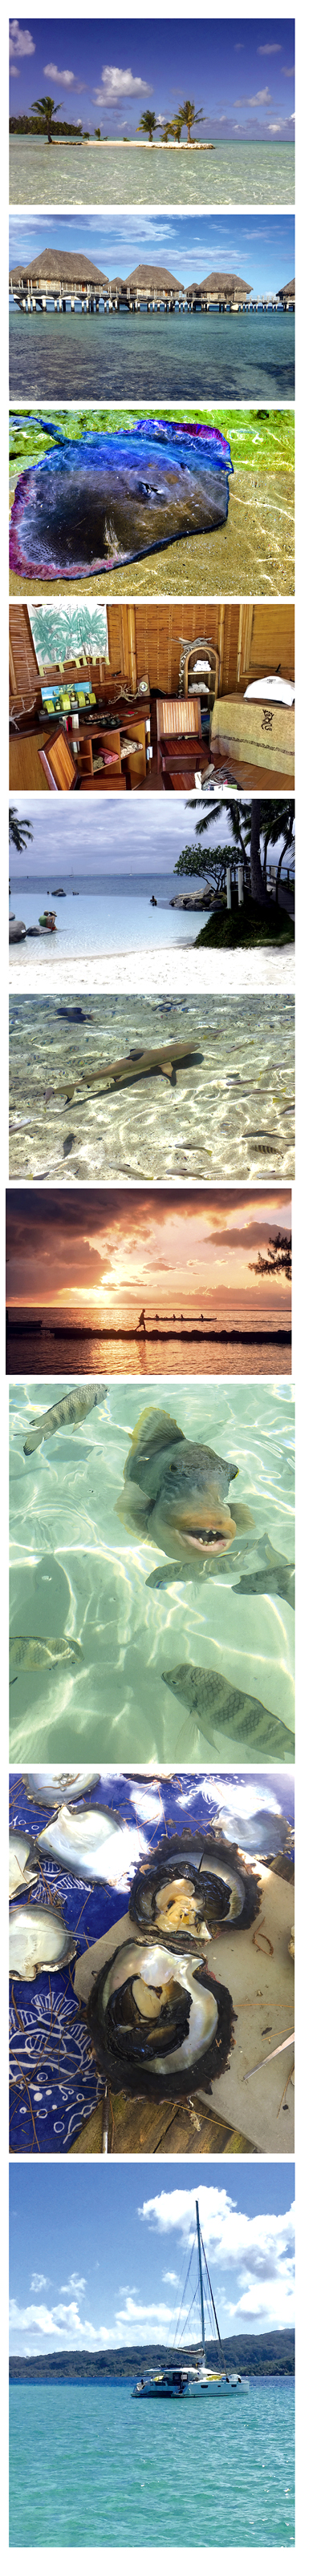 Tahiti image